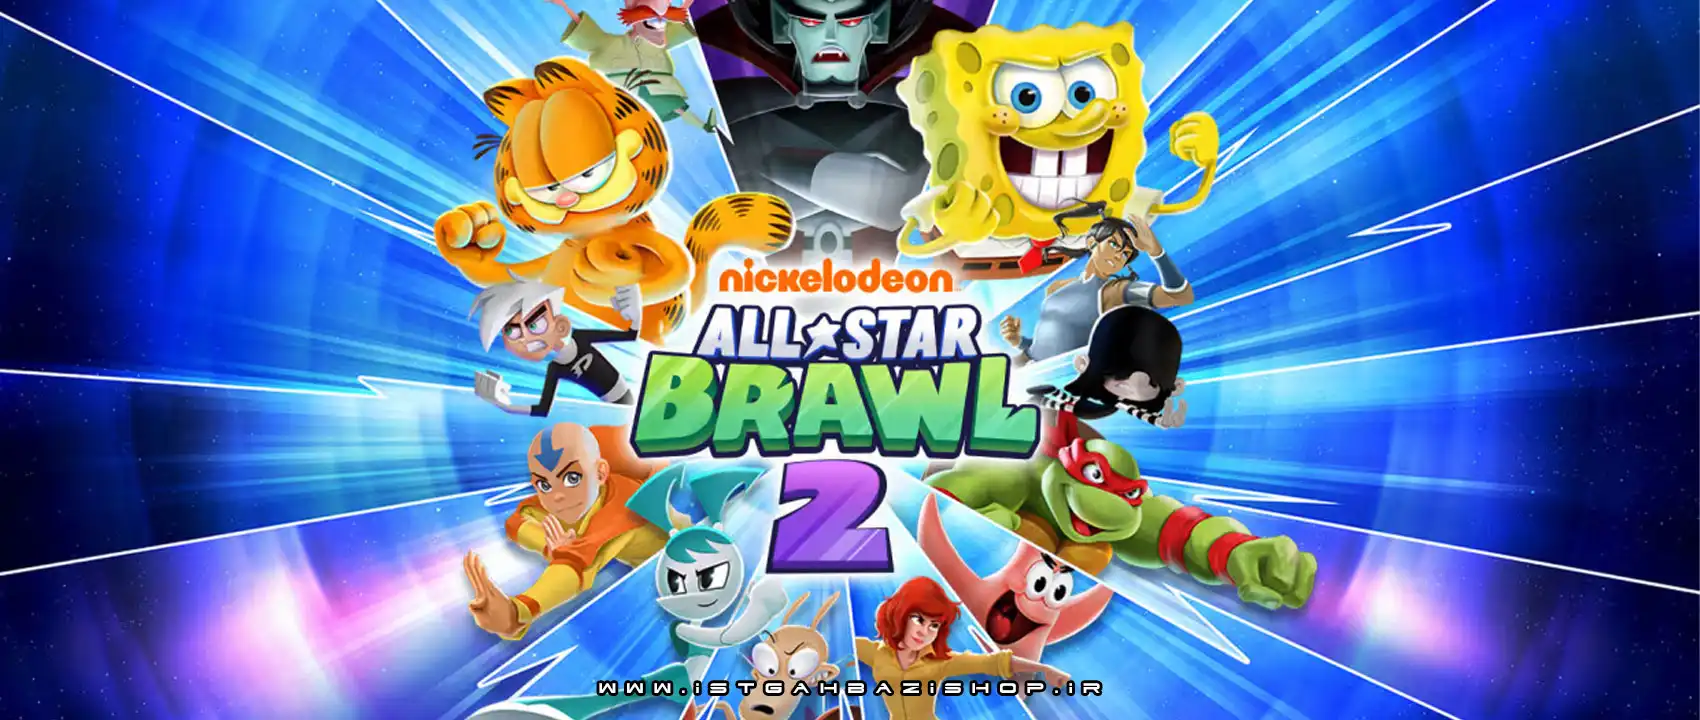 Nickelodeon All Star Brawl 2 Ps5